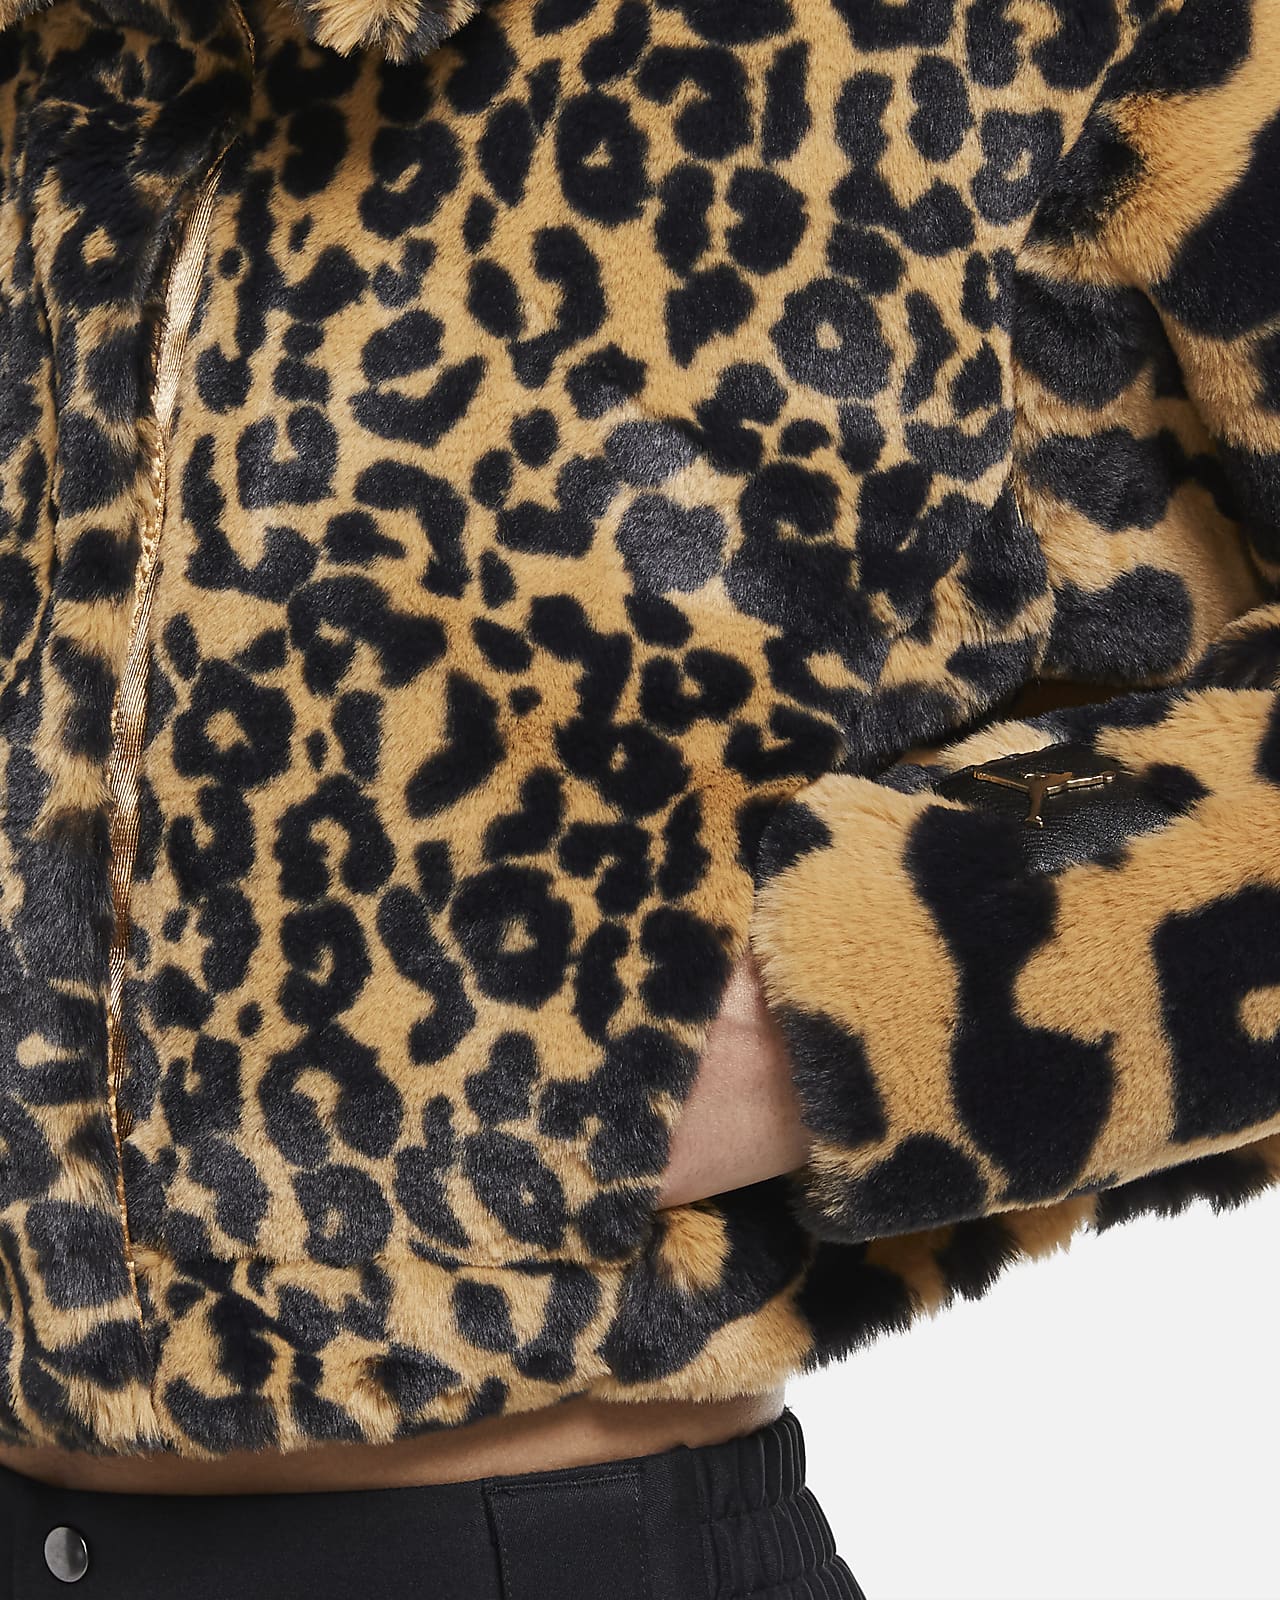 leopard print jordans womens